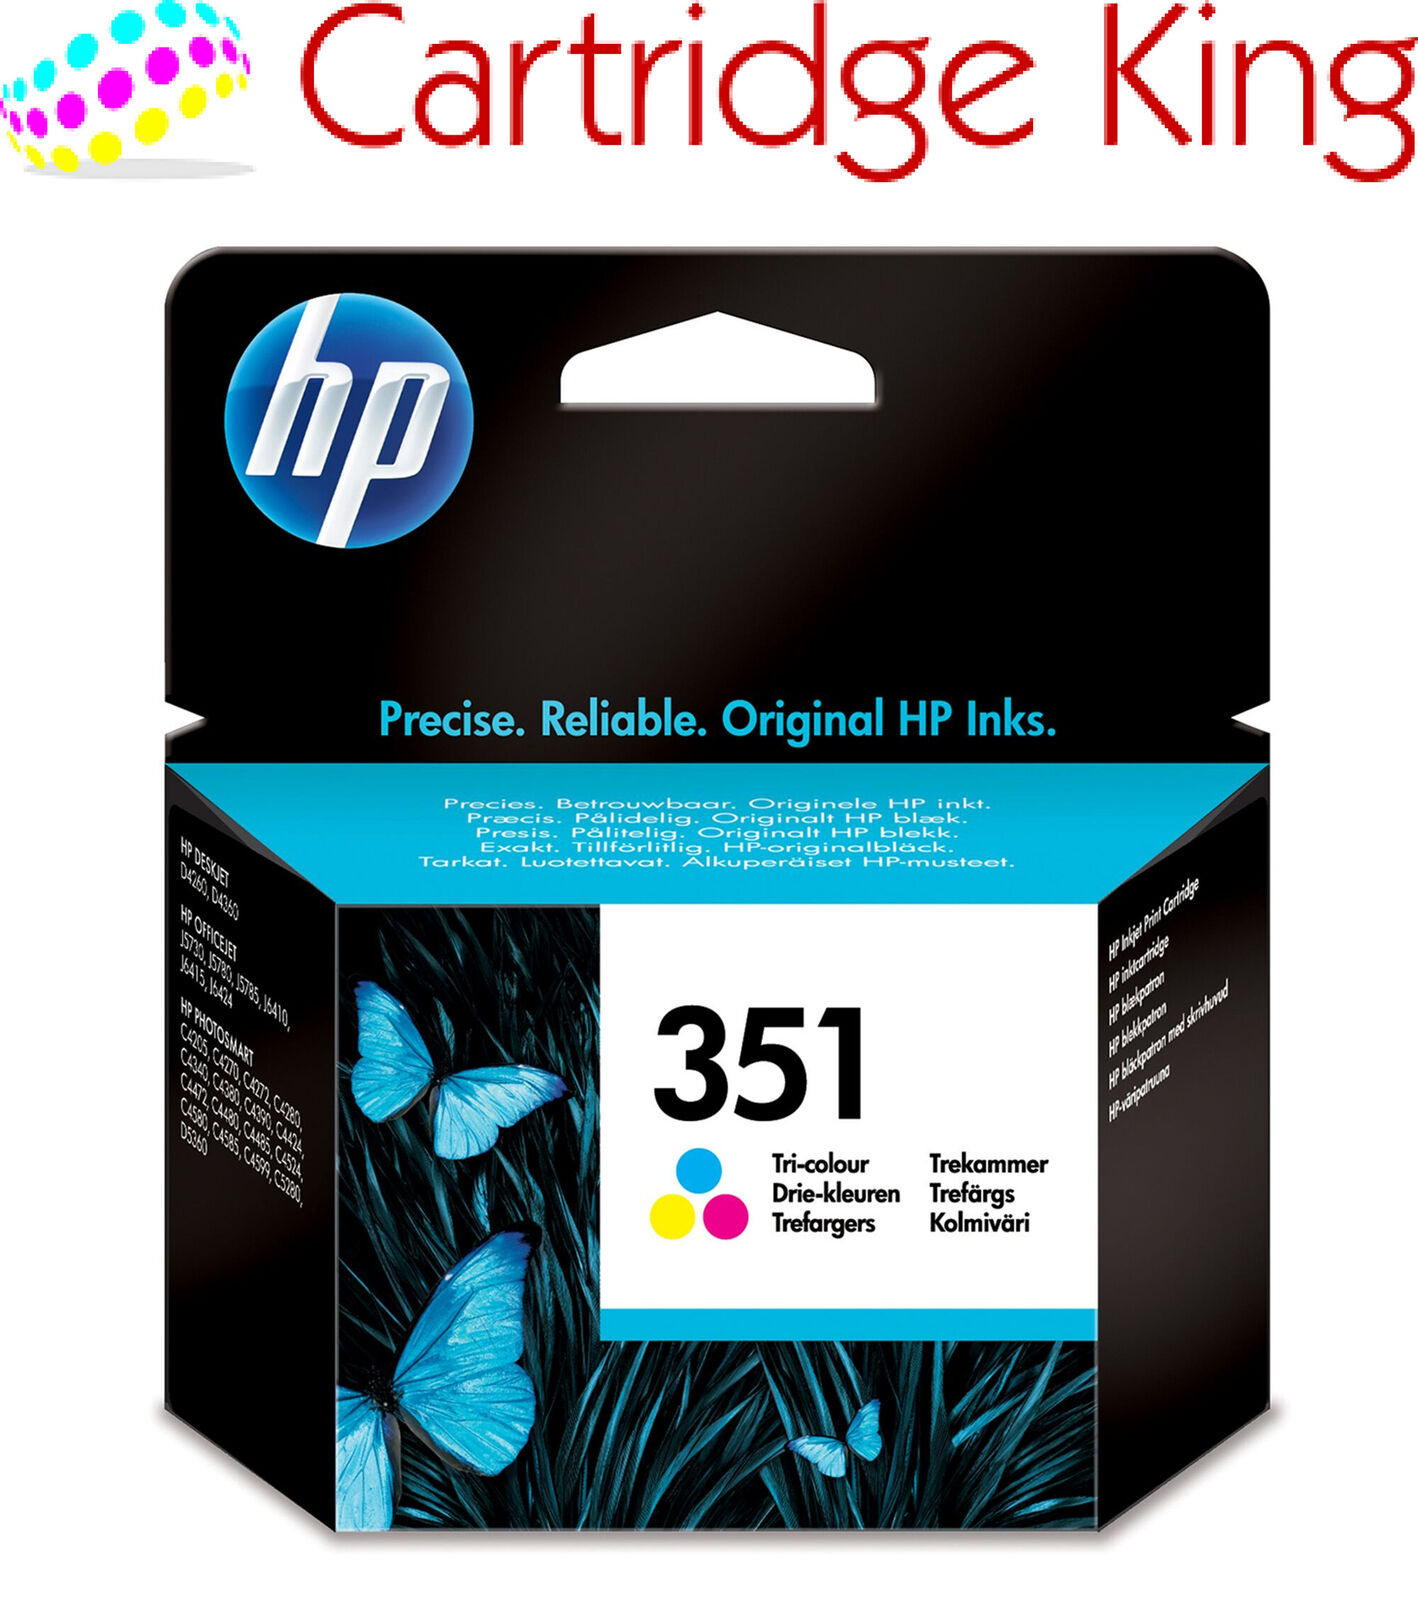 HP 351 Tri-colour Original Ink Cartridge for HP Photosmart C4383 Printer